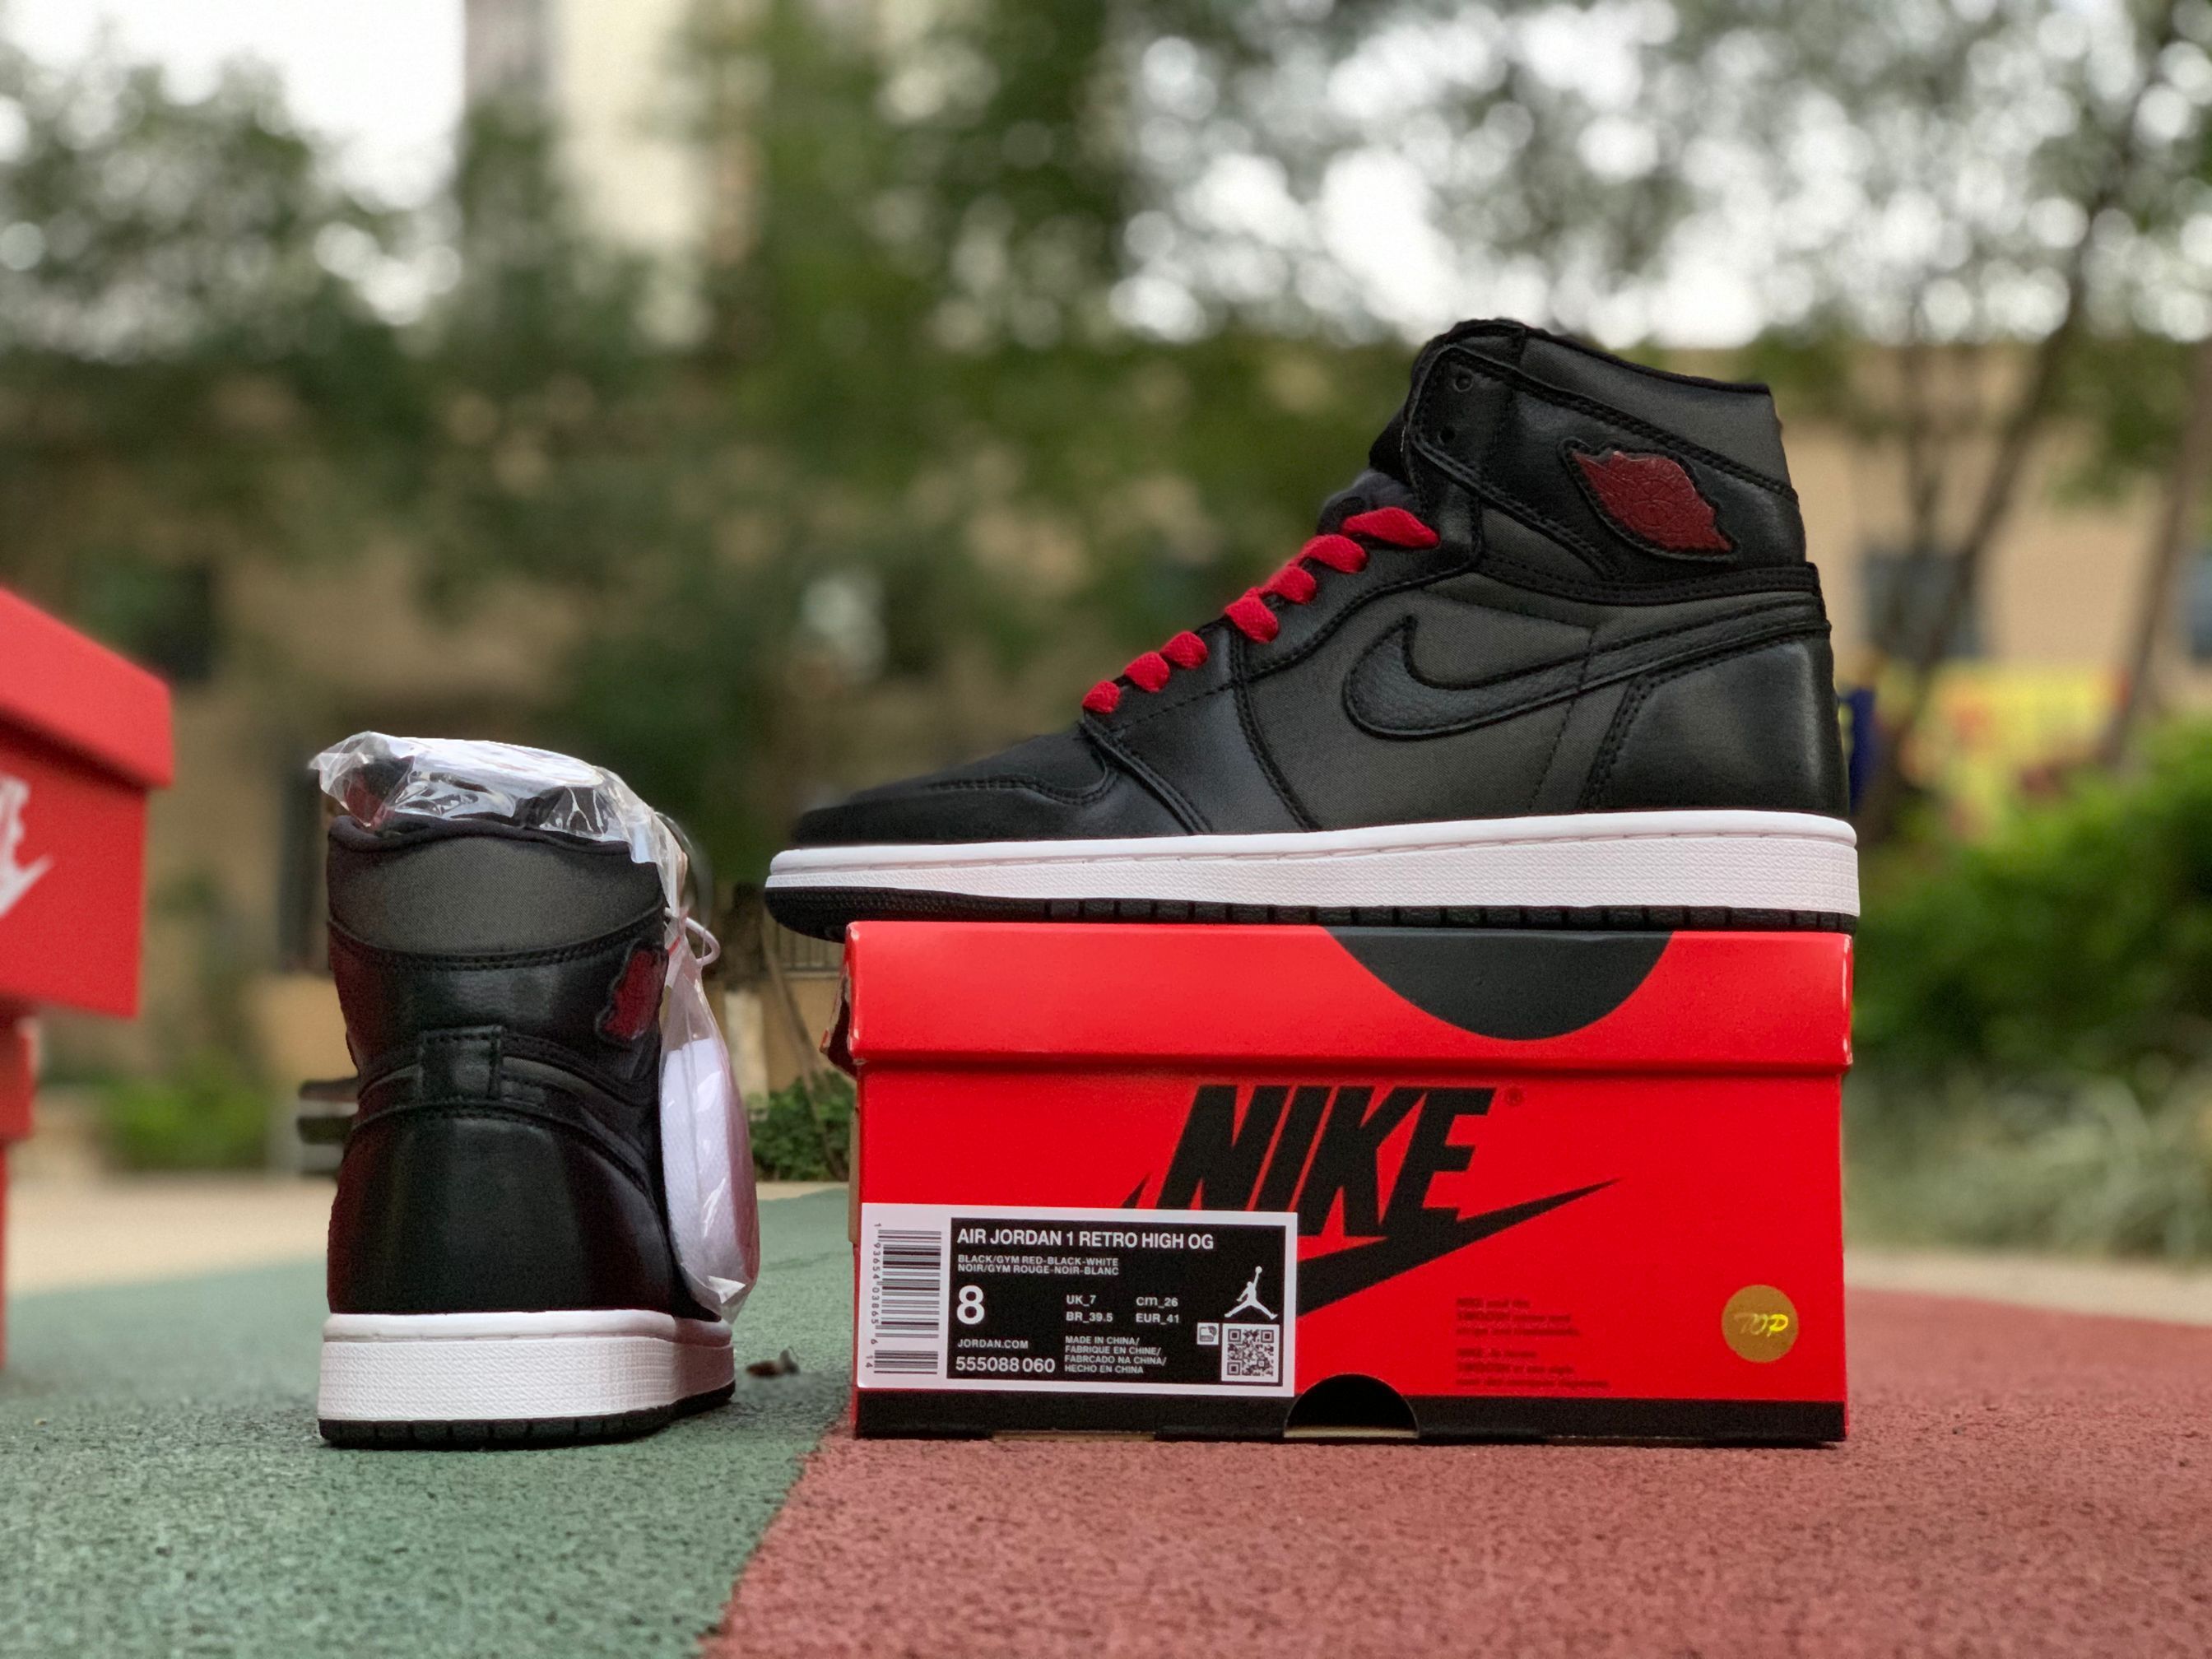 Nike Air Jordan 1 Retro High Og Black Gym Red 5550 060